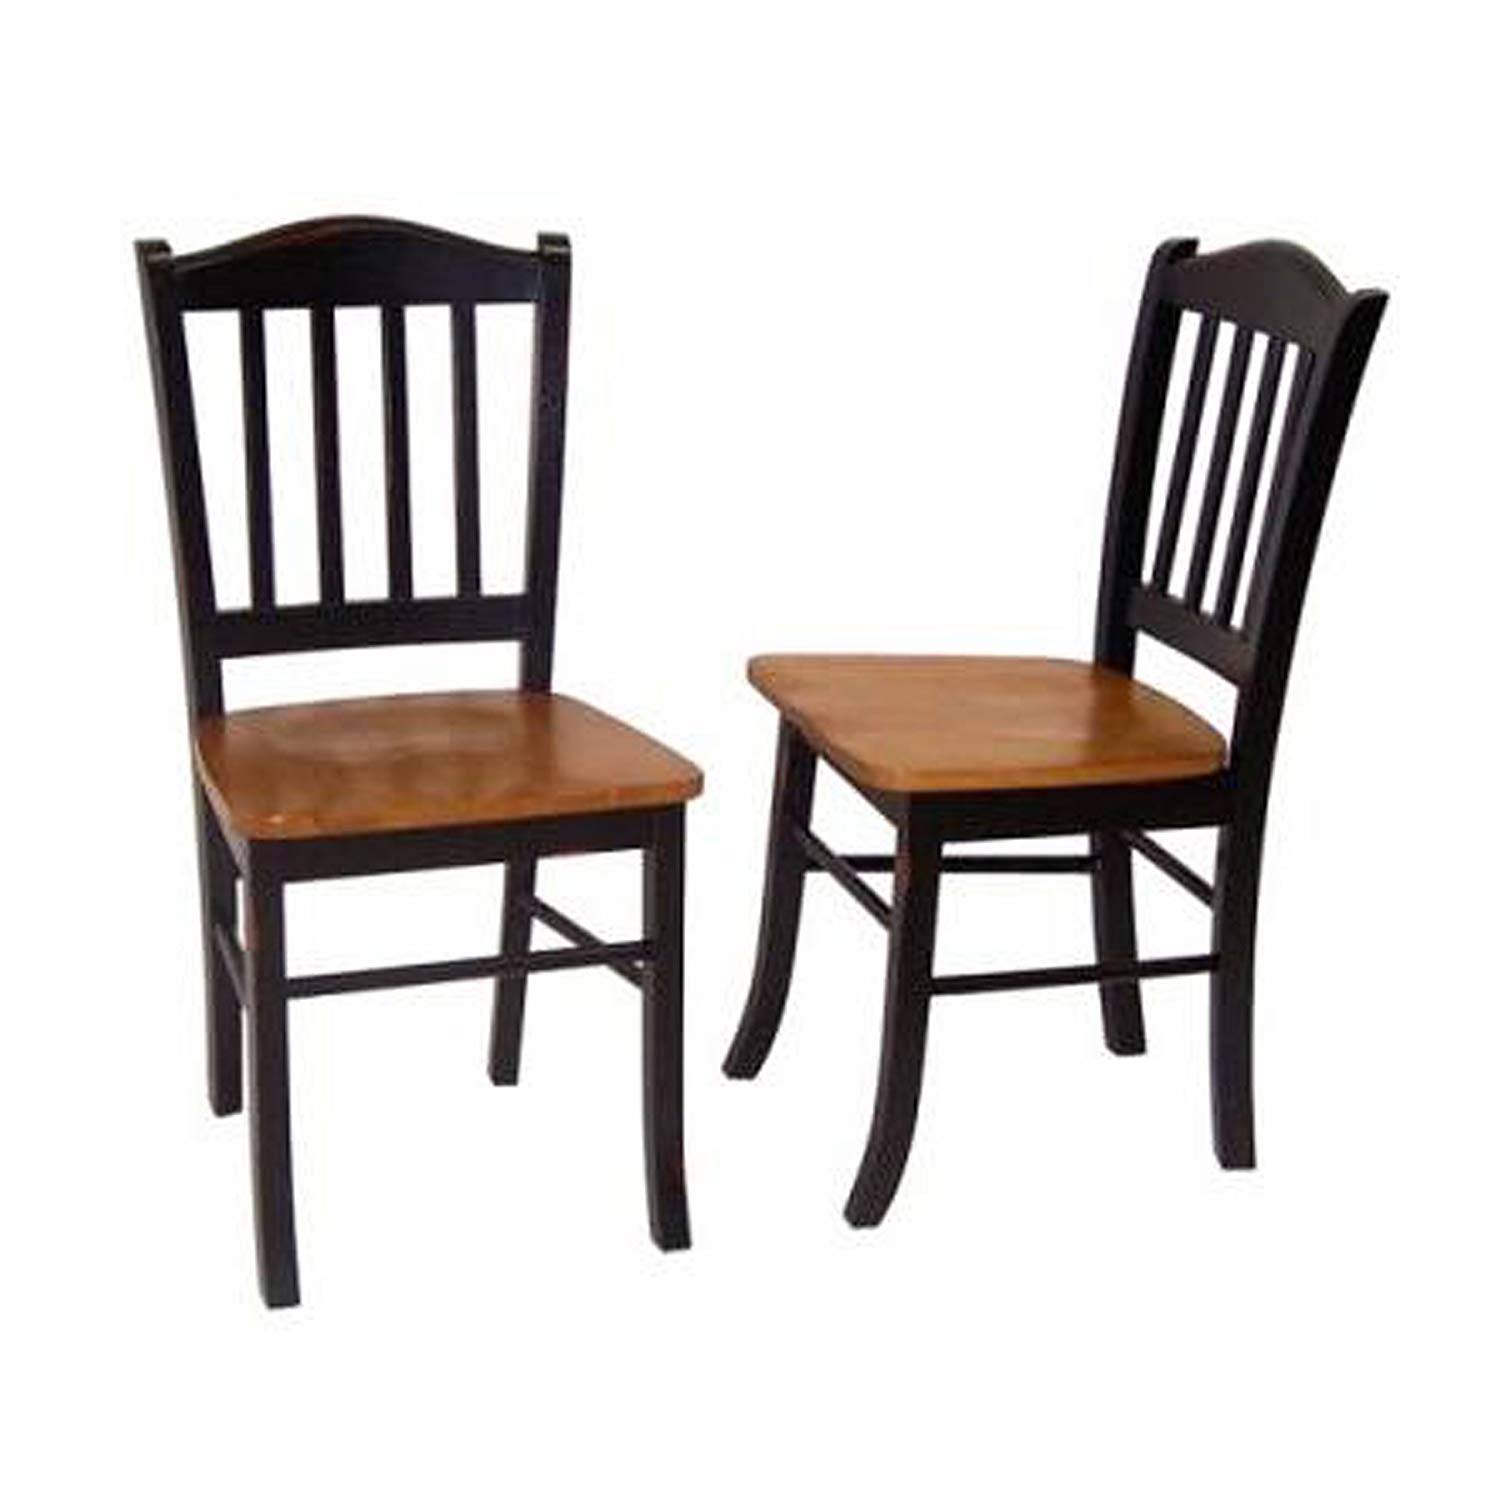 Kitchen Chairs amazon.com: boraam 30536 shaker chair, black/oak, set of 2: kitchen u0026 dining XDDPGRF